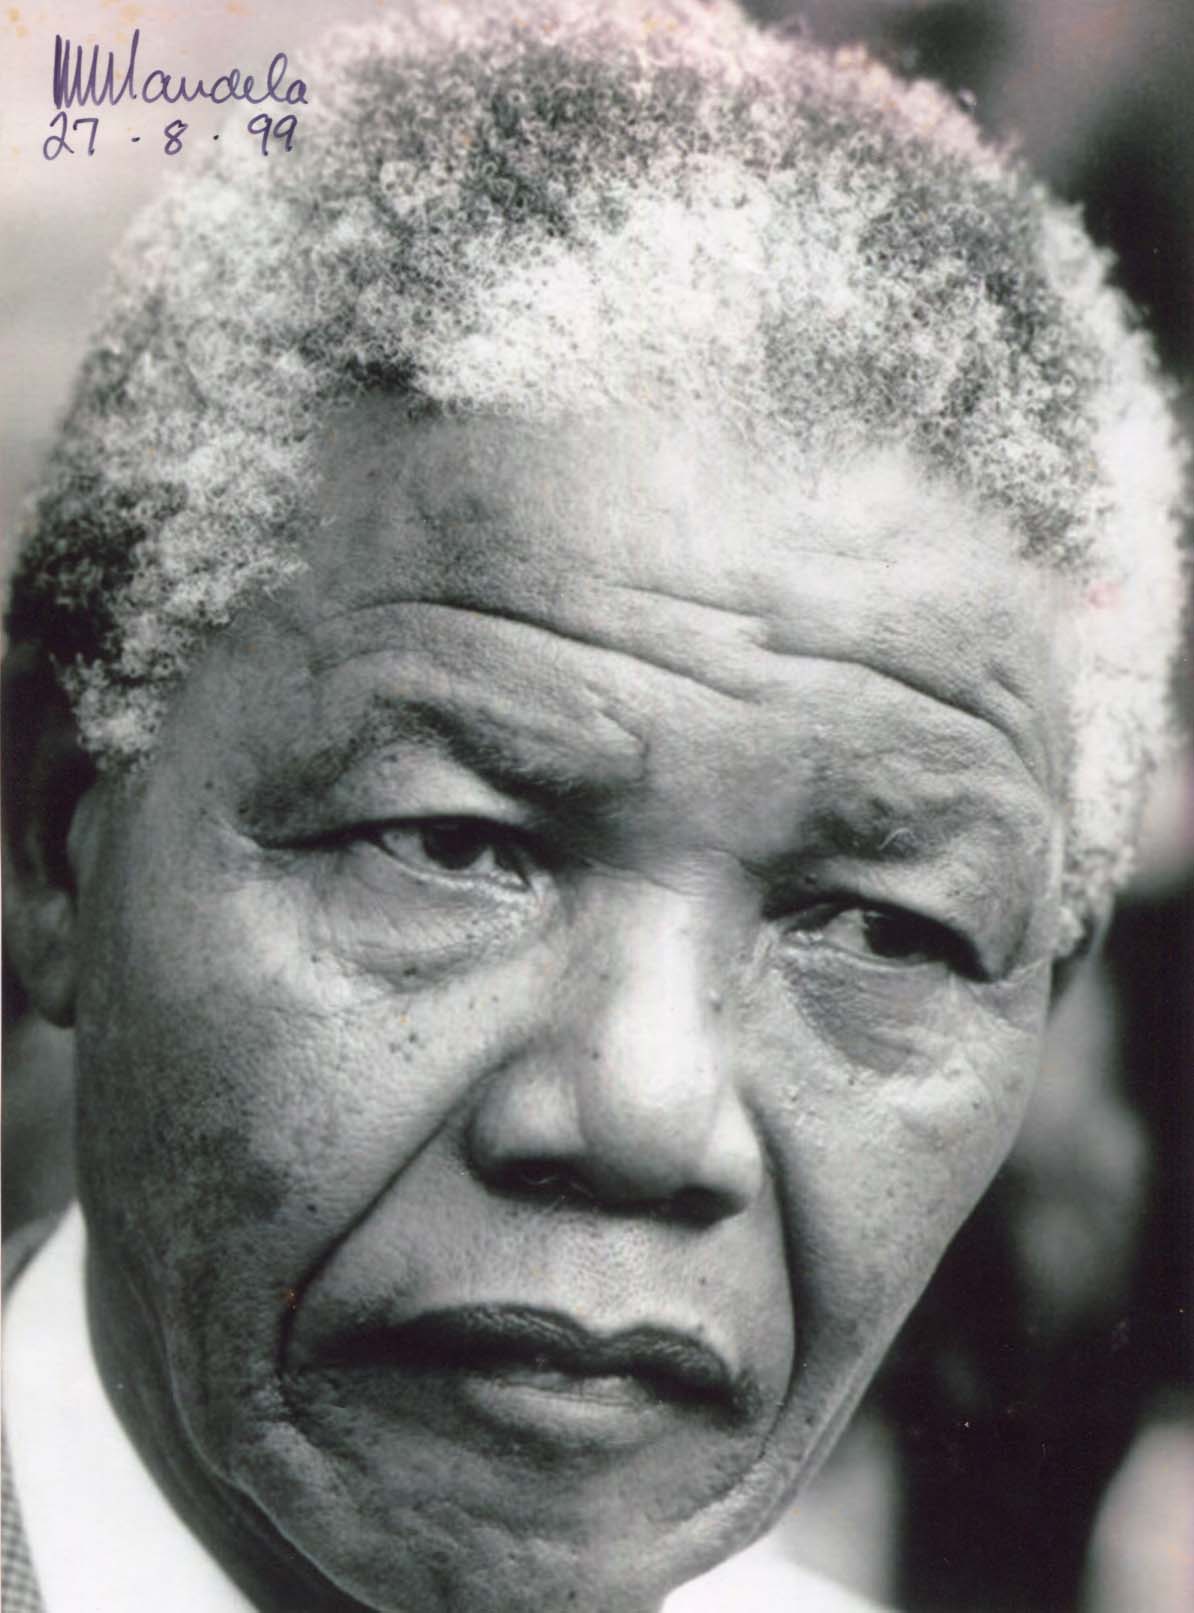 Nelson Mandela Autograph Autogramm | ID 8322085027989